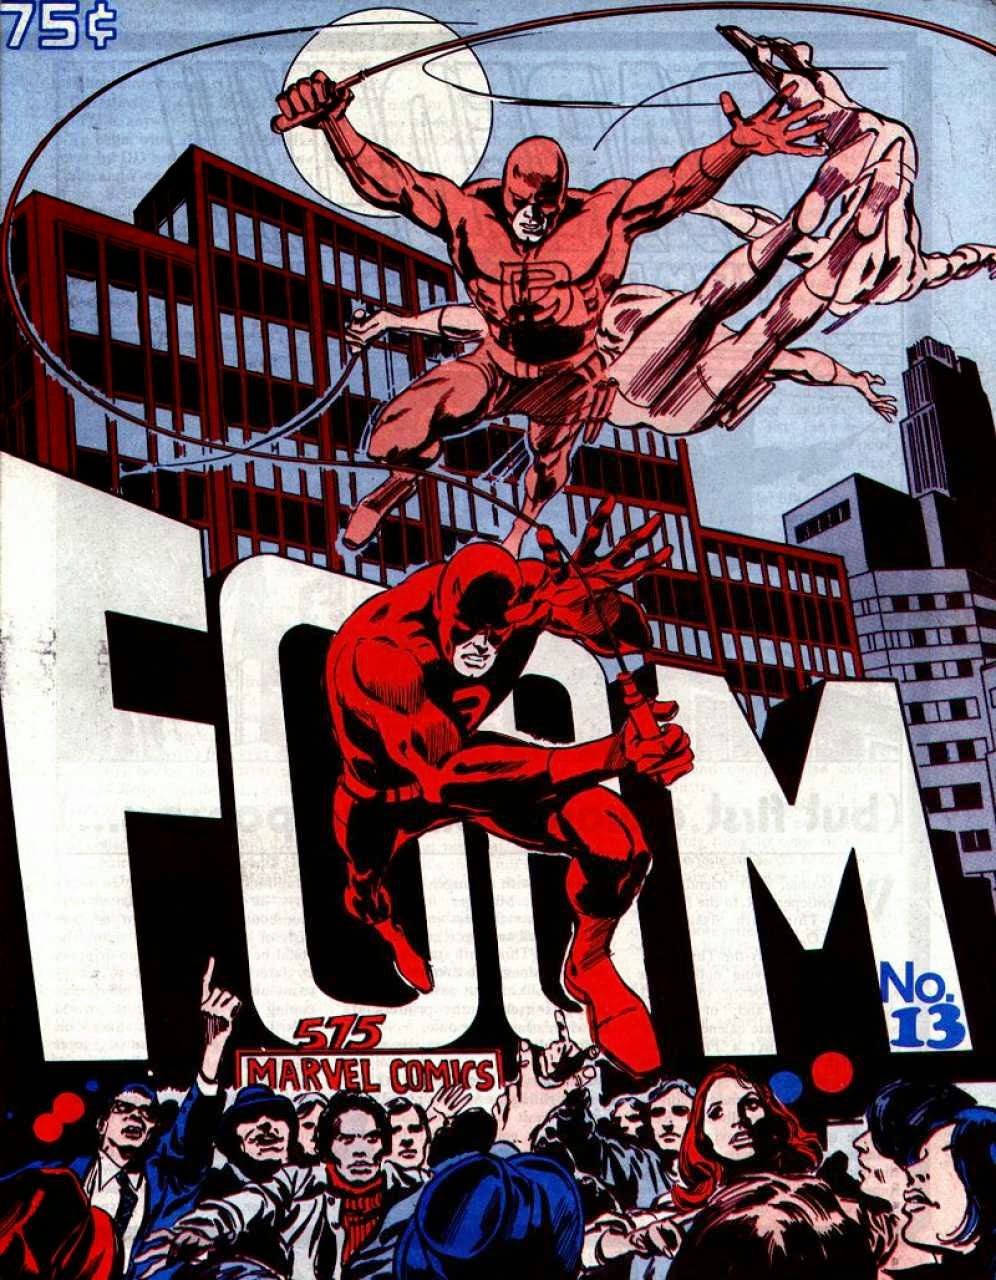 FOOM (Friends of Ol' Marvel) #13 Comic